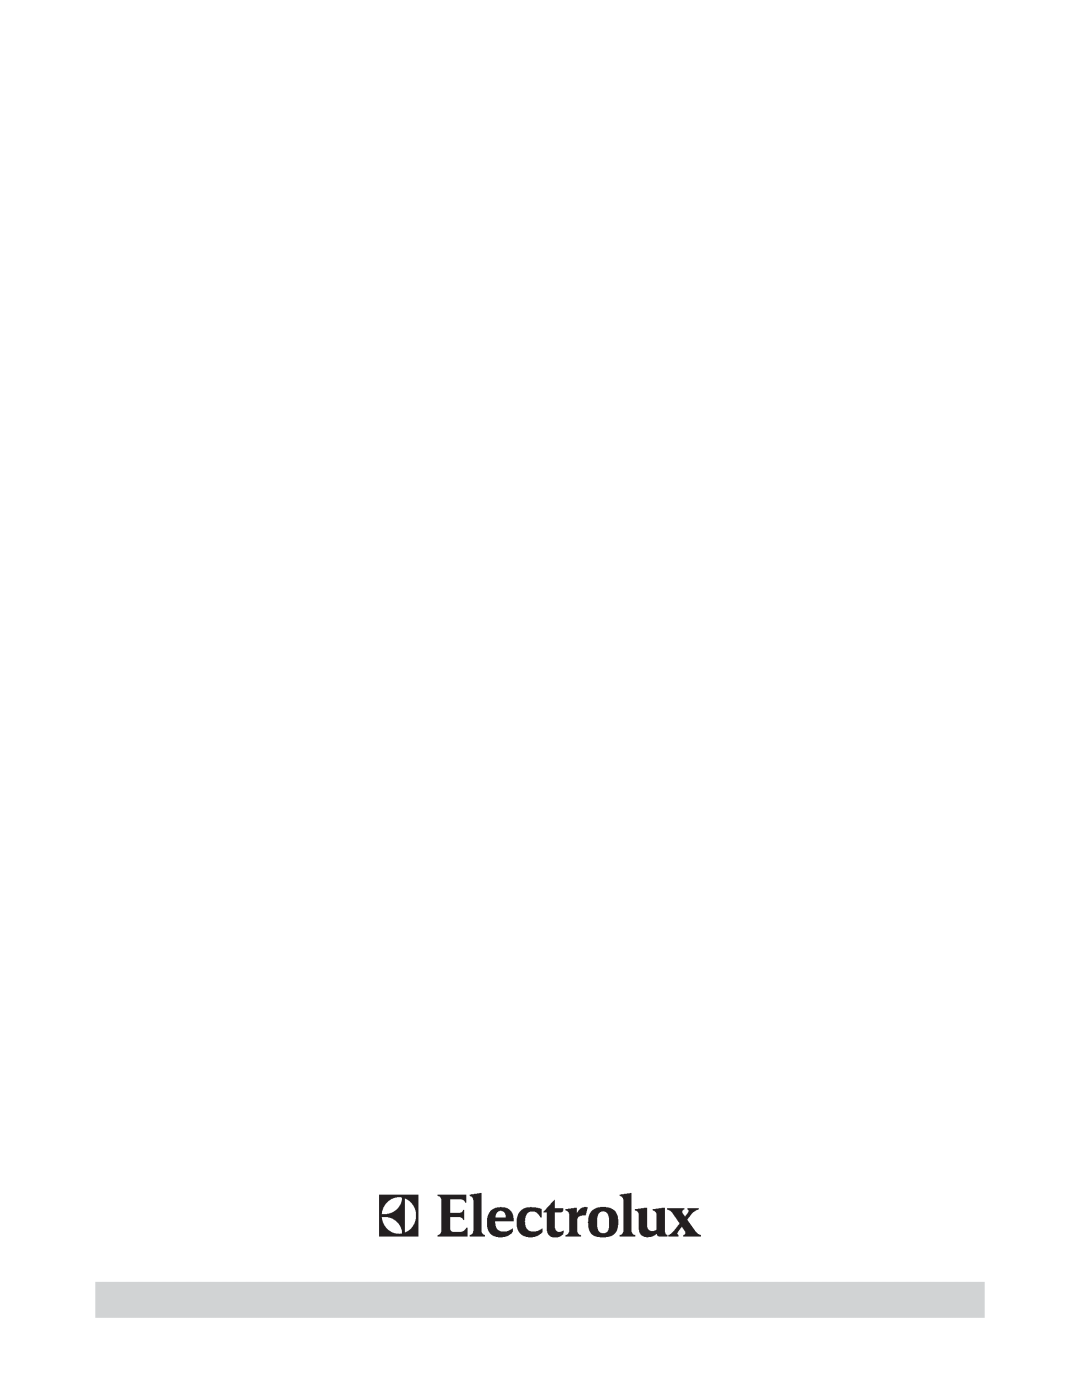 Electrolux 318205134 manual 